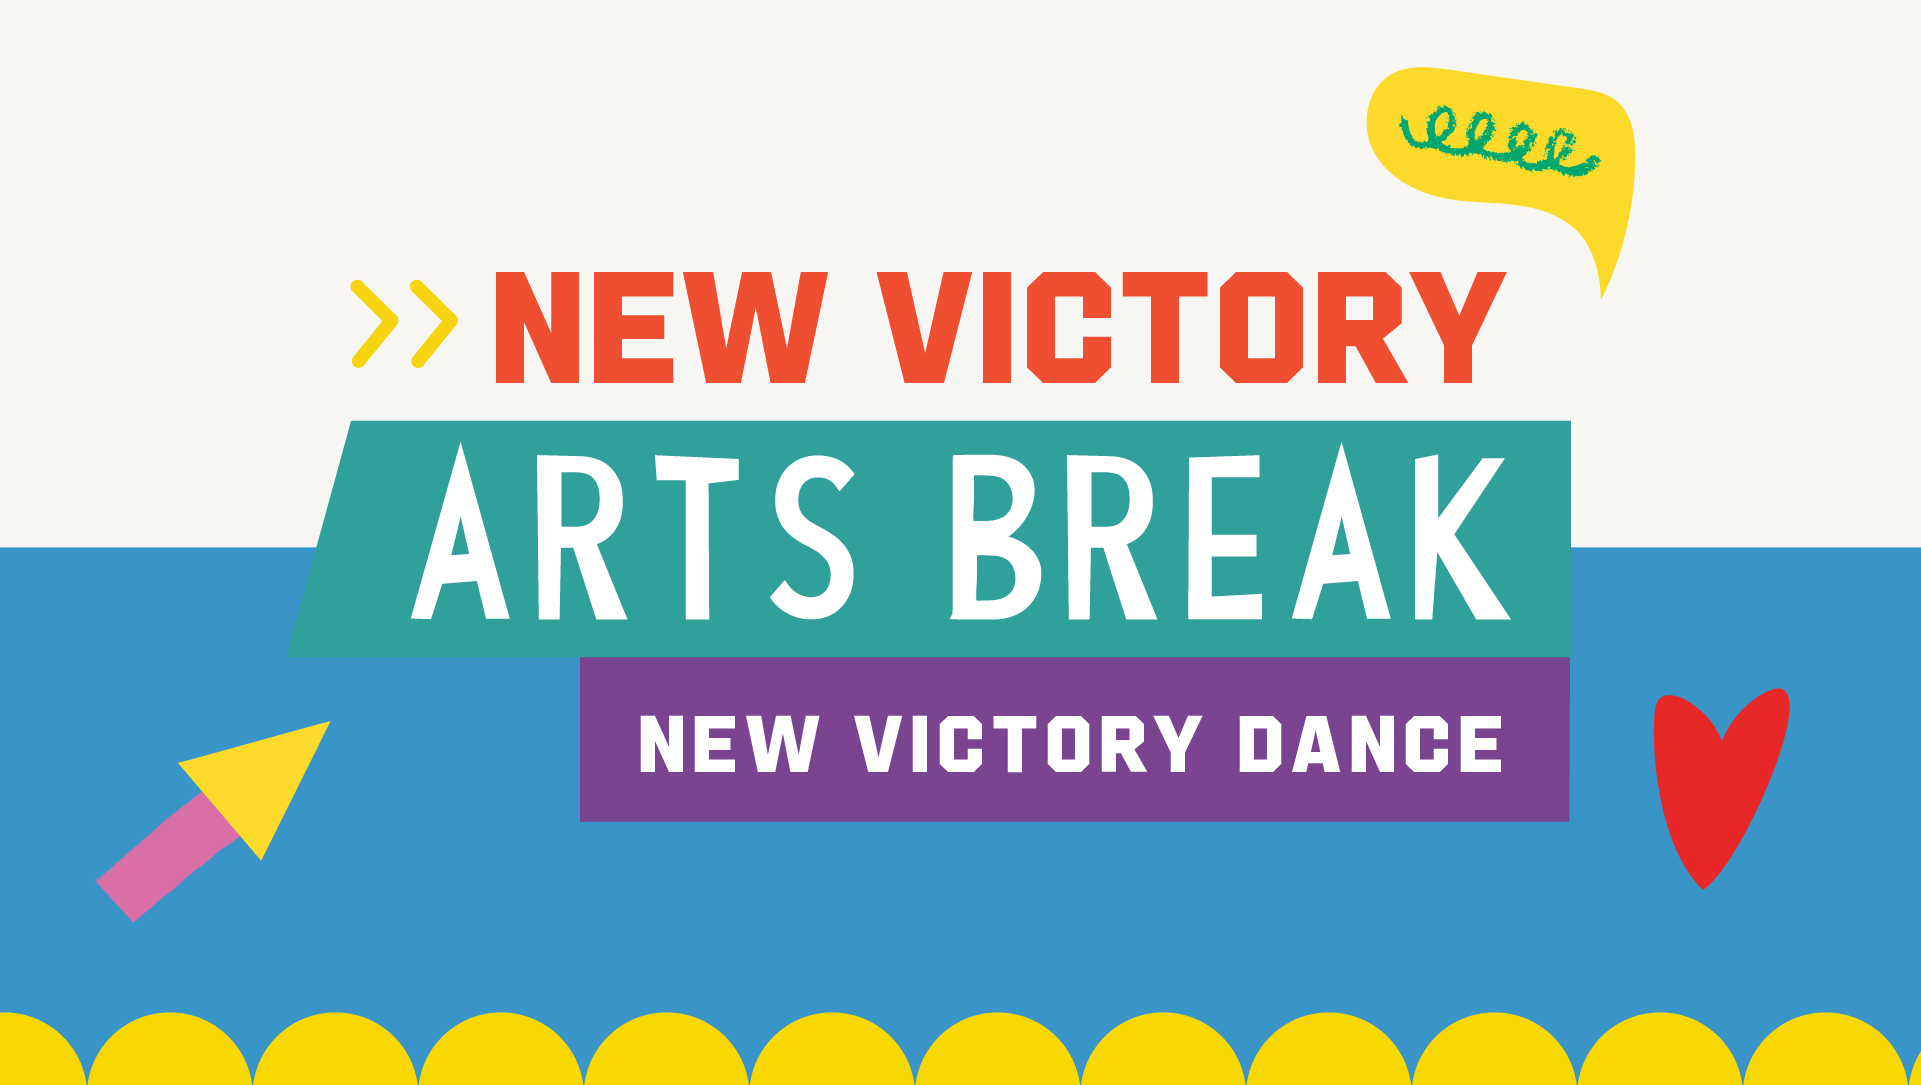 New Victory Arts Break: New Victory Dance